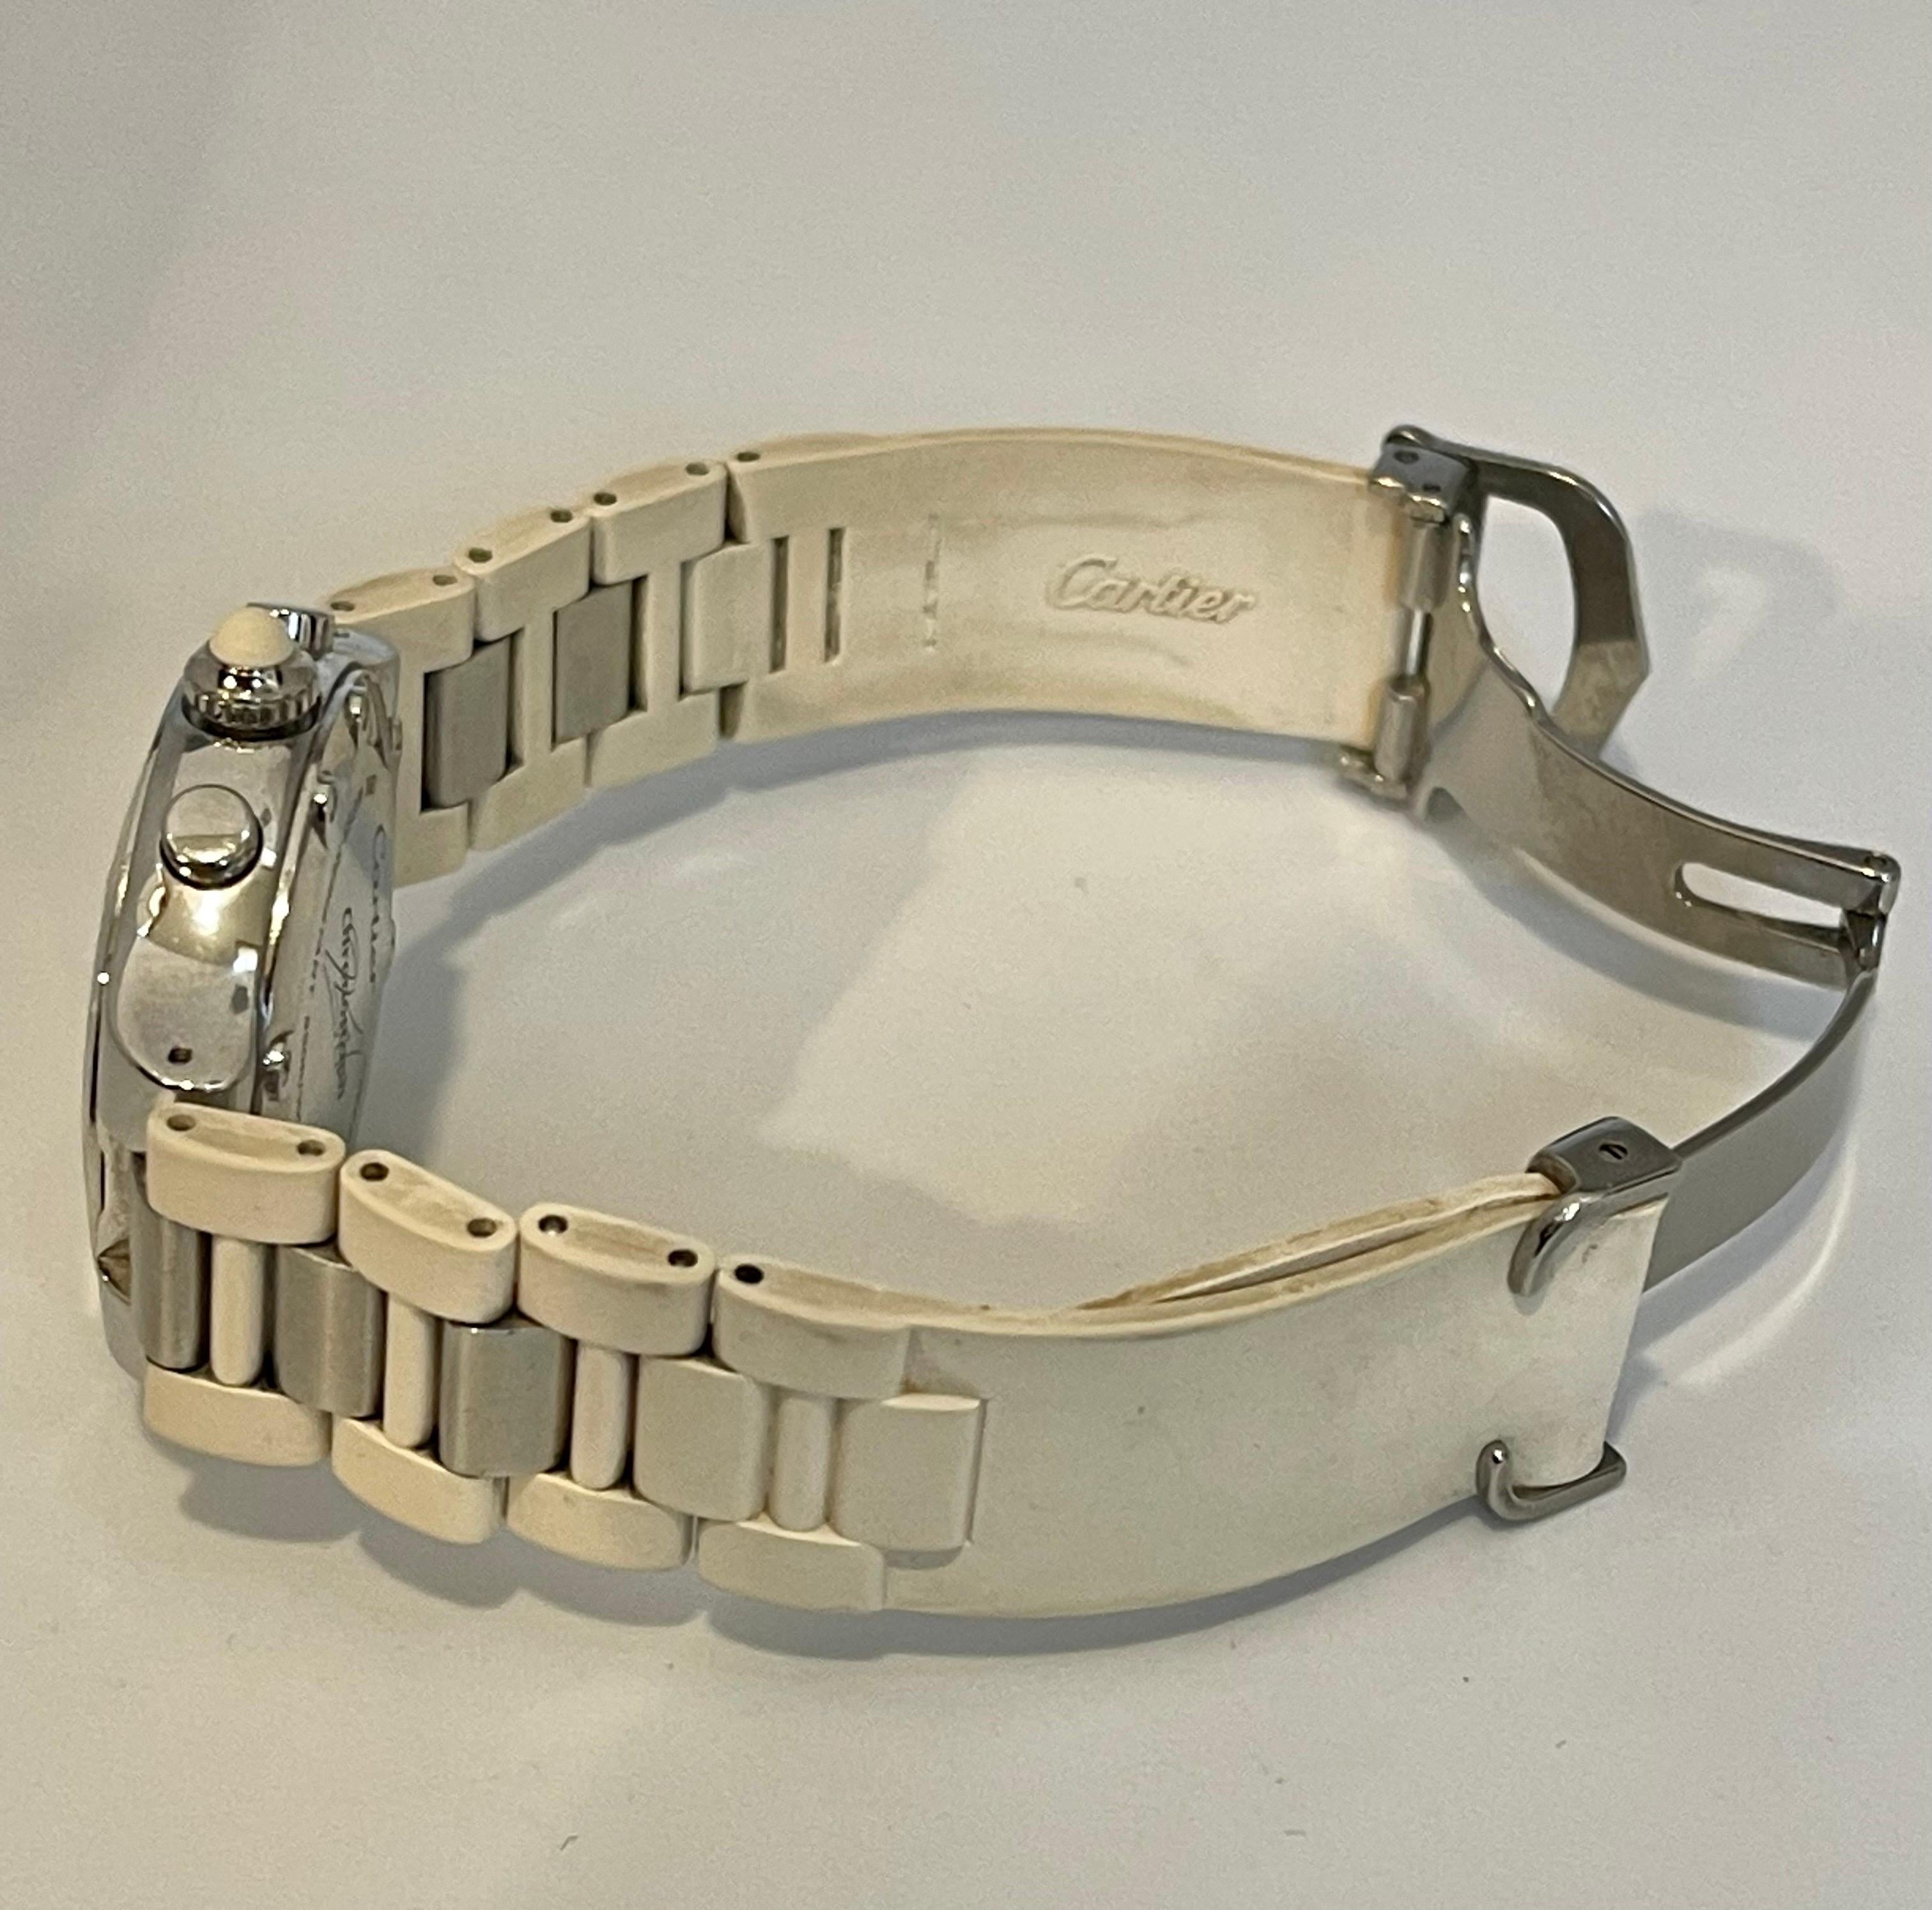 Cartier Chronoscaph Cream Women's Rubber Strap Watch, 2996 For Sale 1